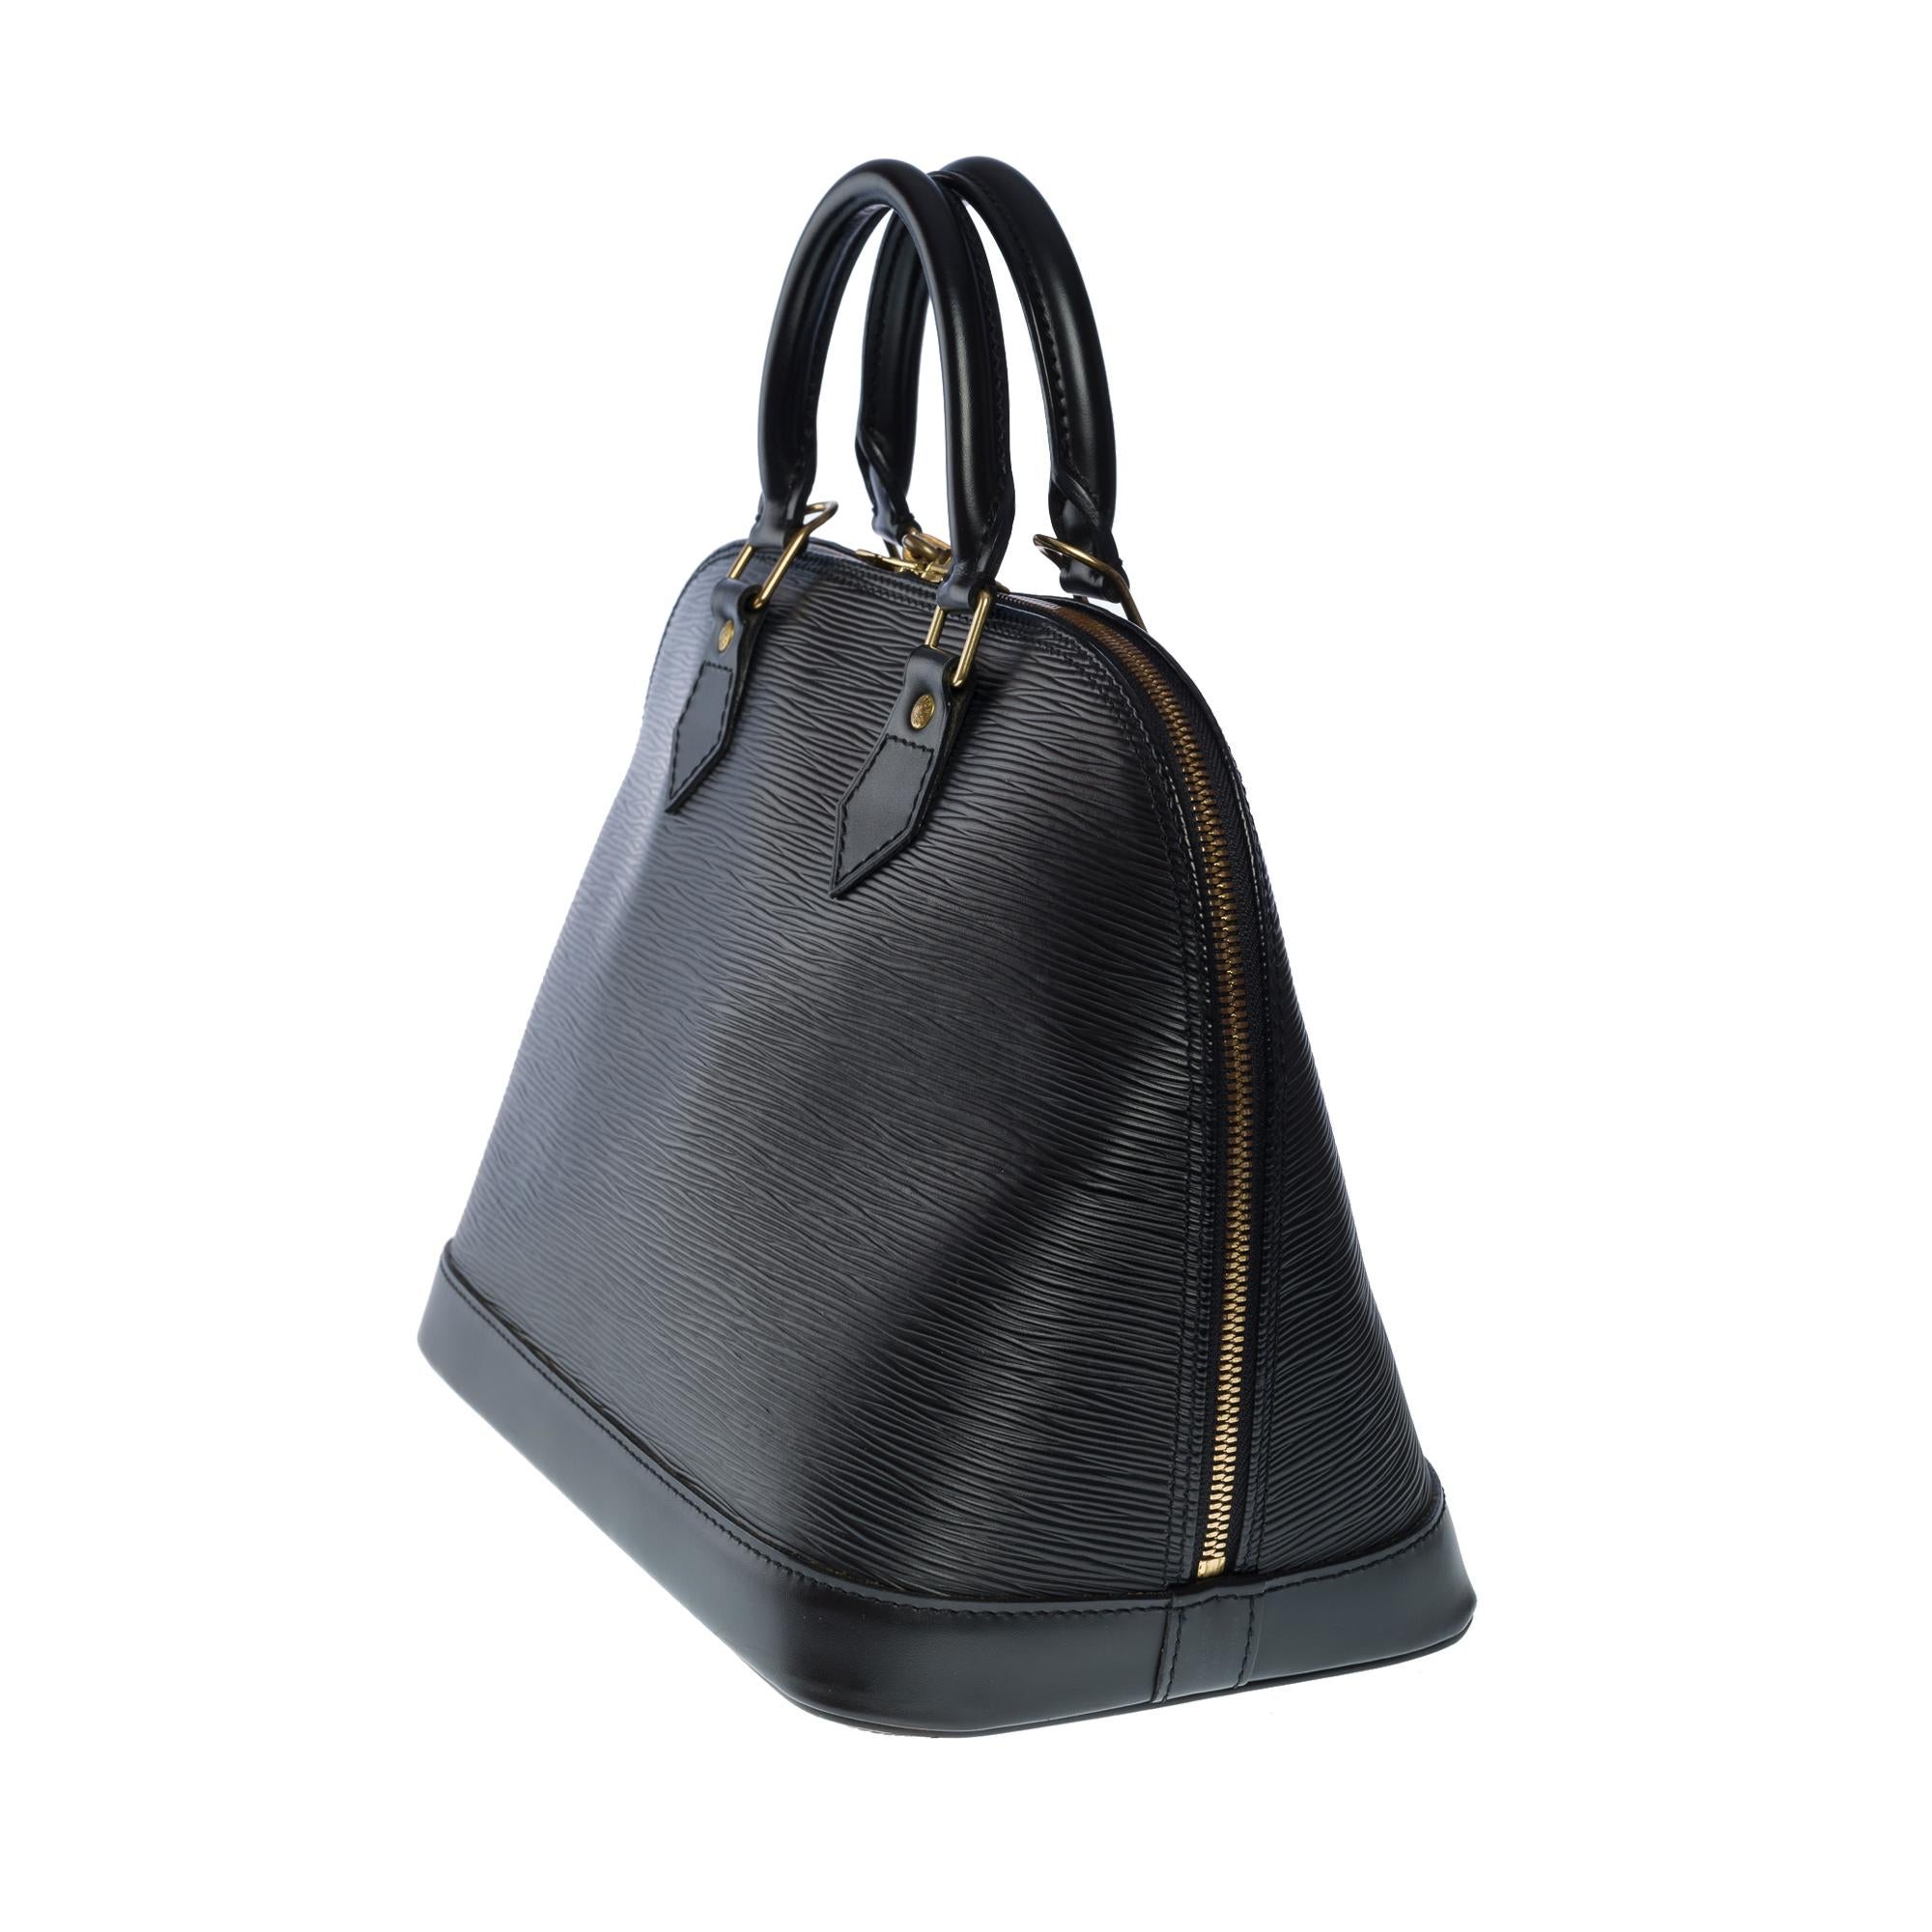 Women's Louis Vuitton Alma handbag in black épi leather with gold hardware